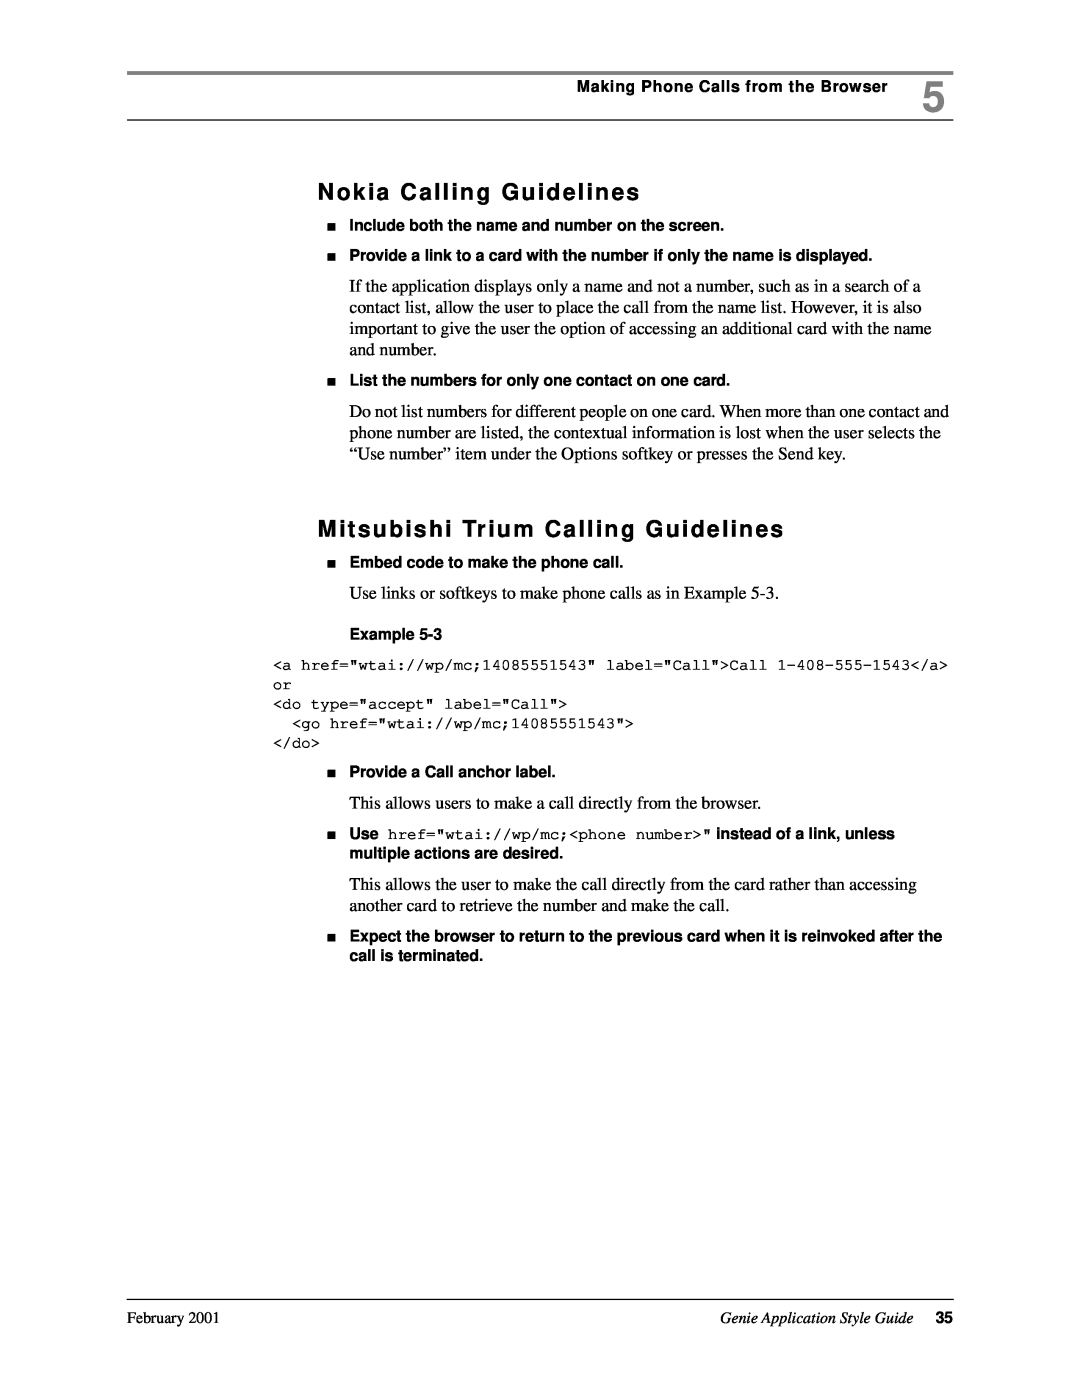 Genie 7110 manual Nokia Calling Guidelines, Mitsubishi Trium Calling Guidelines 